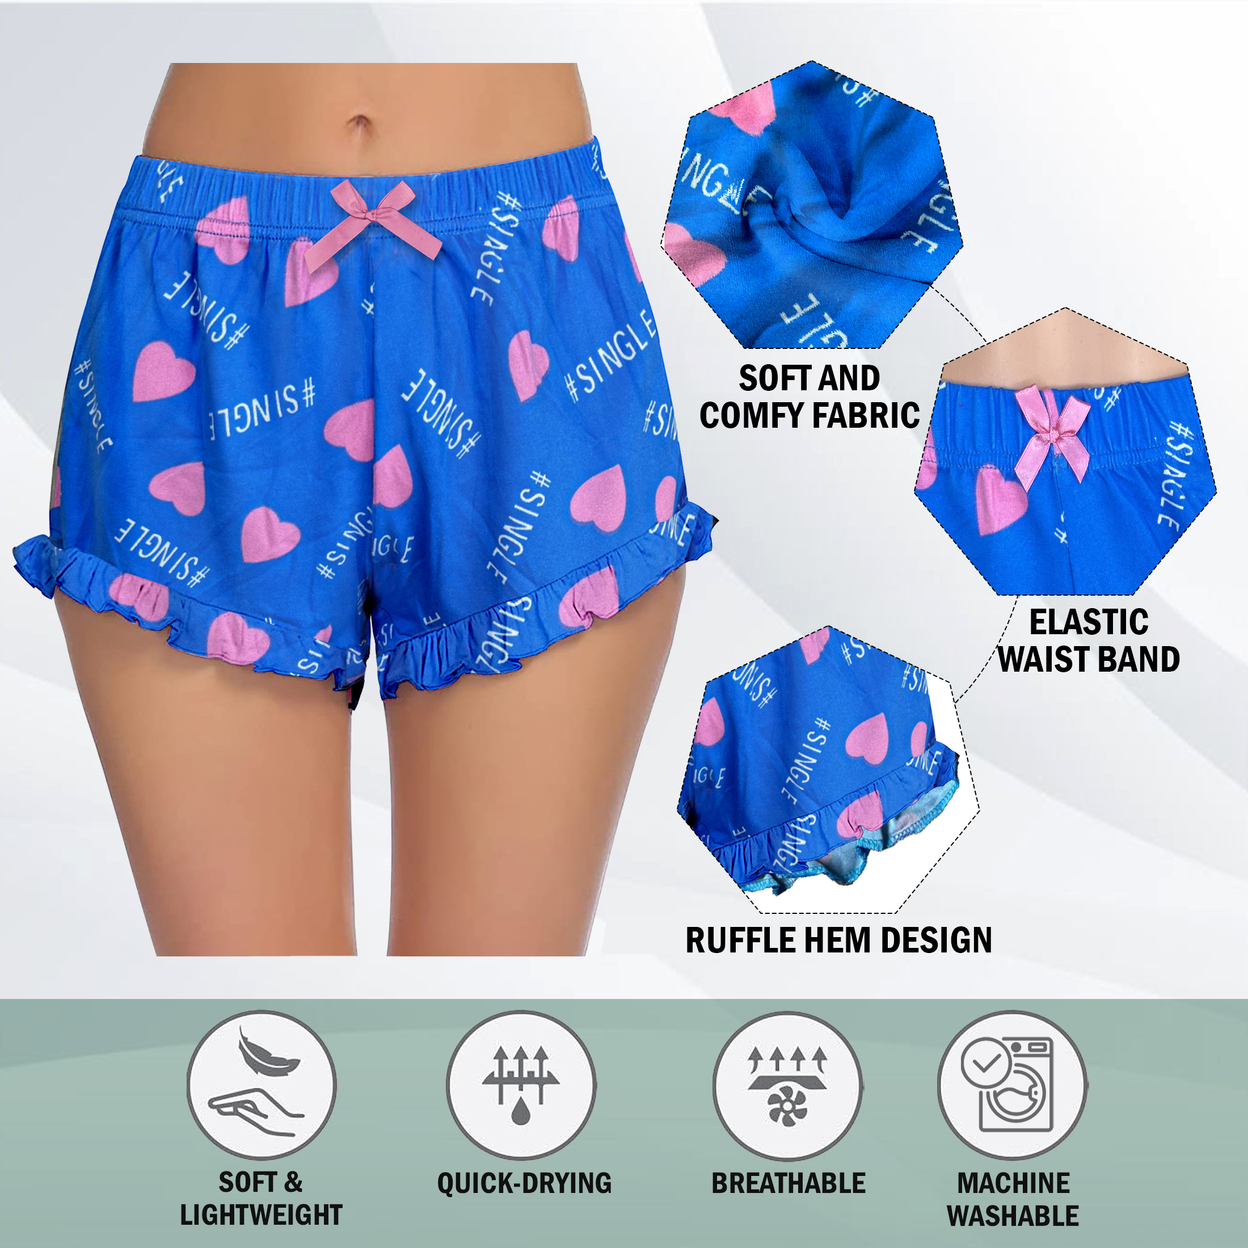 6-Pack: Women's Ultra-Soft Cozy Fun Print Ruffled Hem Sleep Lounge Pajama Shorts - Medium, Shapes